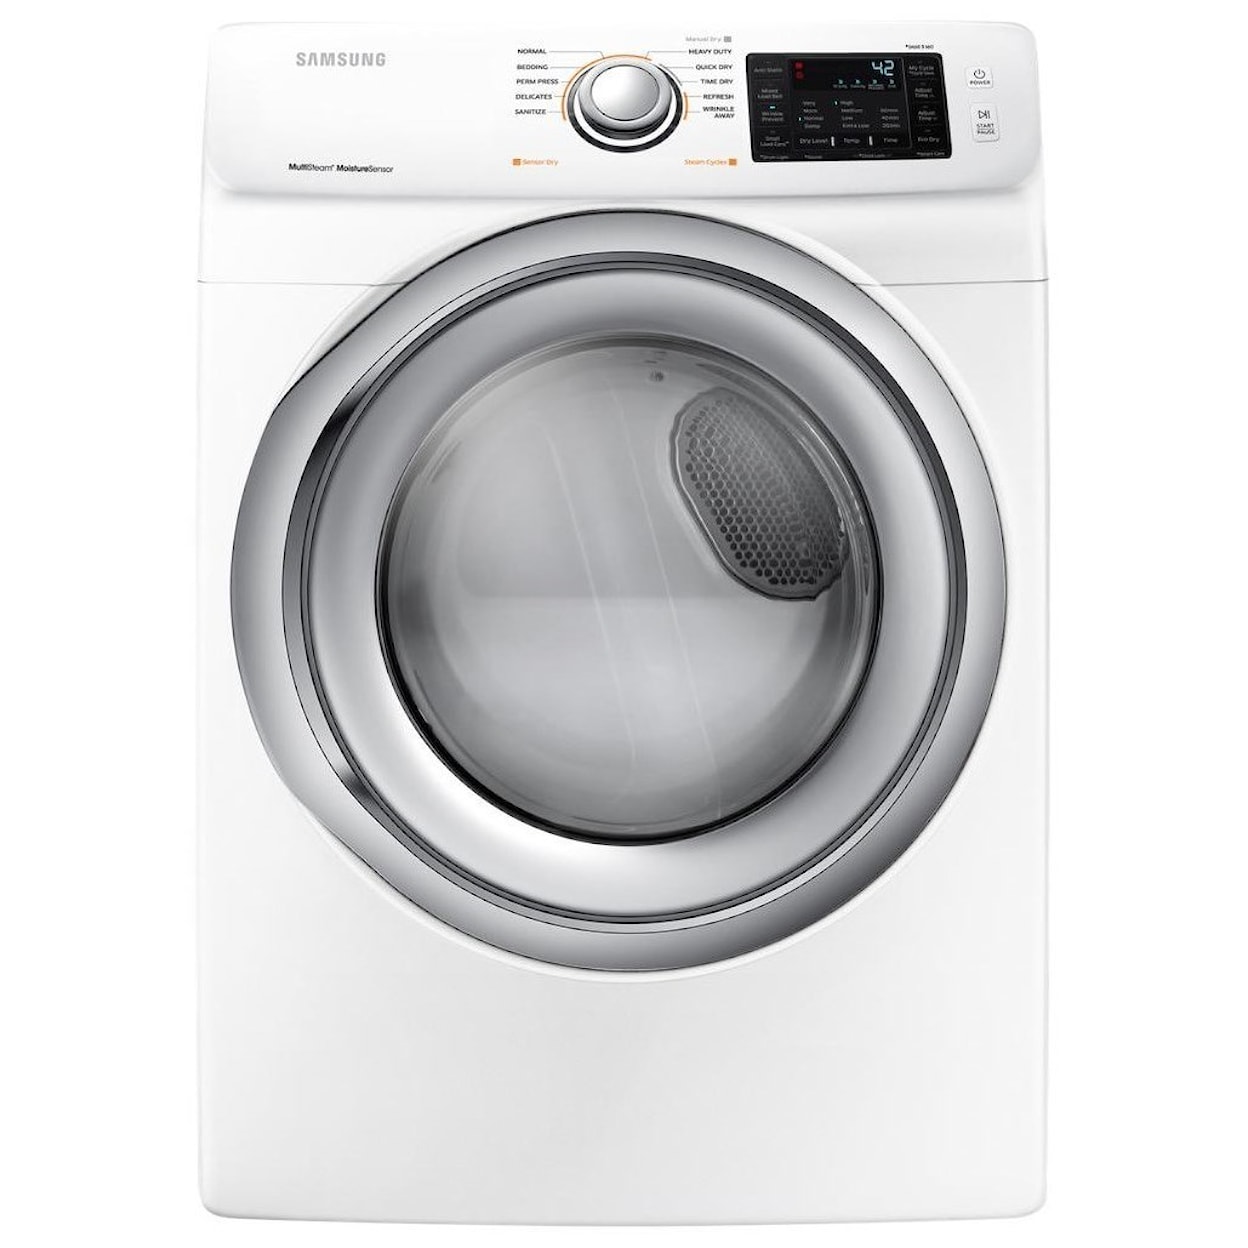 Samsung Appliances Gas Dryers - Samsung DV5300 7.5 Gas Front Load Dryer